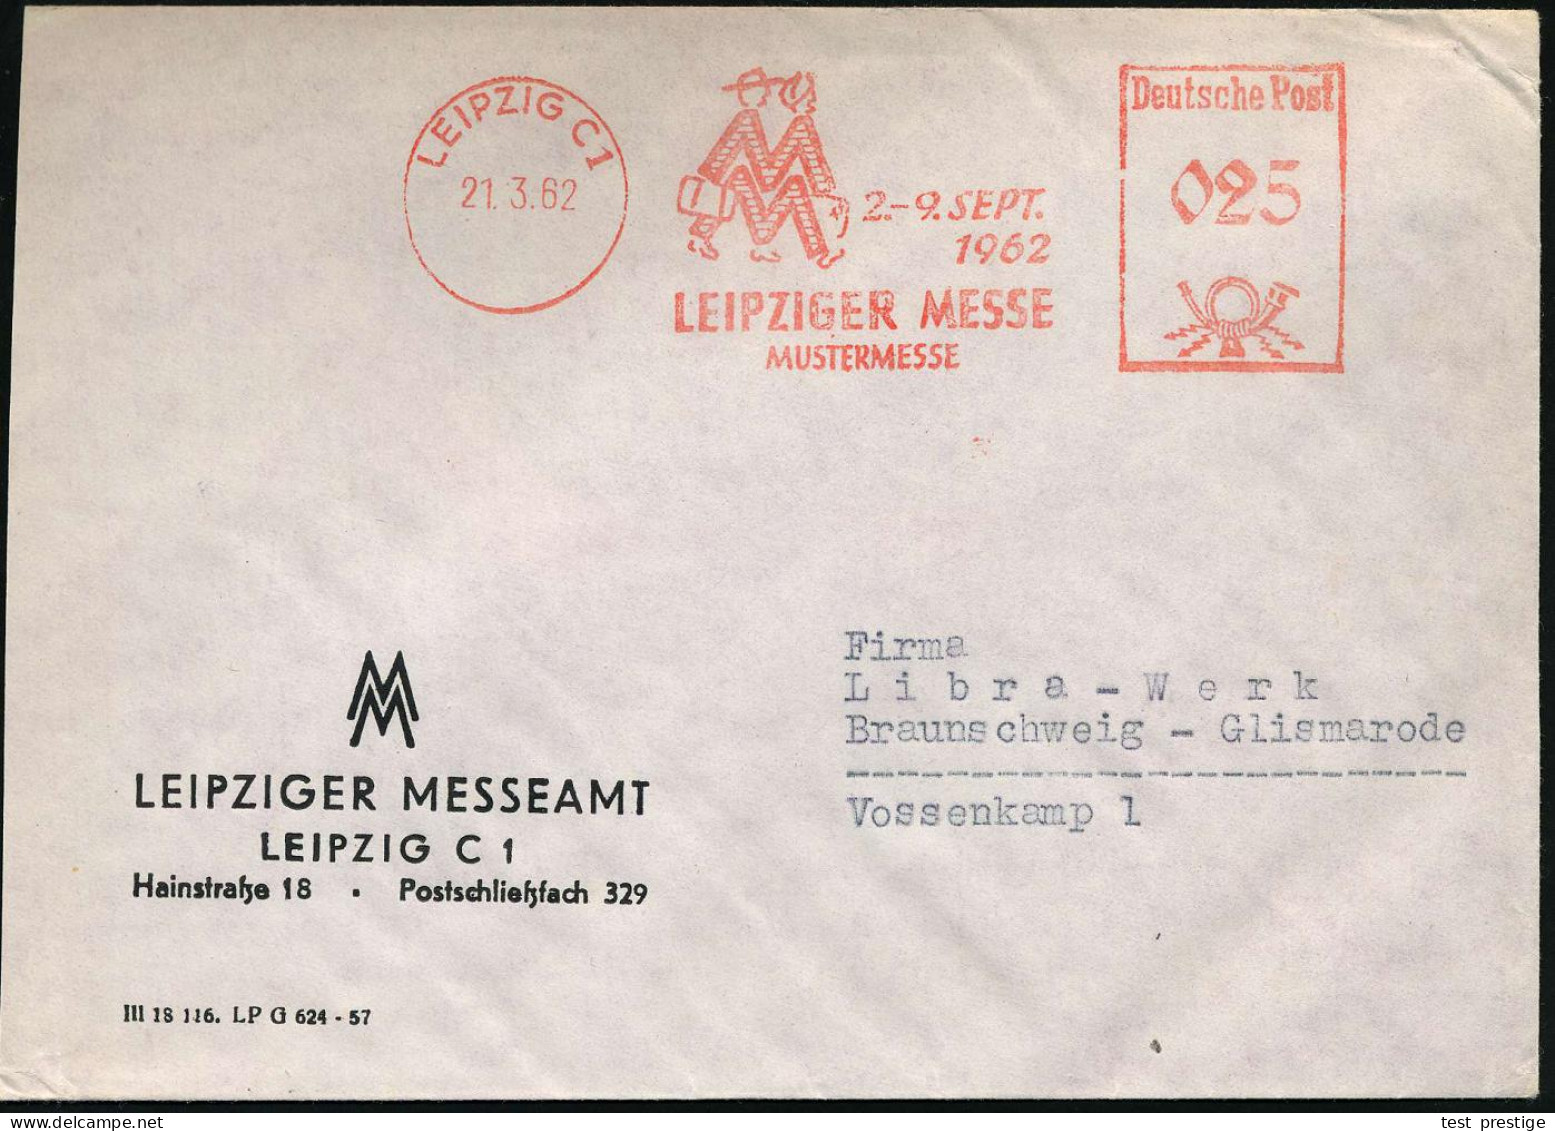 LEIPZIG C1/ 2.-9.SEPT./ 1962/ LEIPZ.MESSE/ MUSTERMESSE 1962 (21.3.) AFS Francotyp 025 Pf. (Messe-Logo: 2 Kofferträger) D - Andere